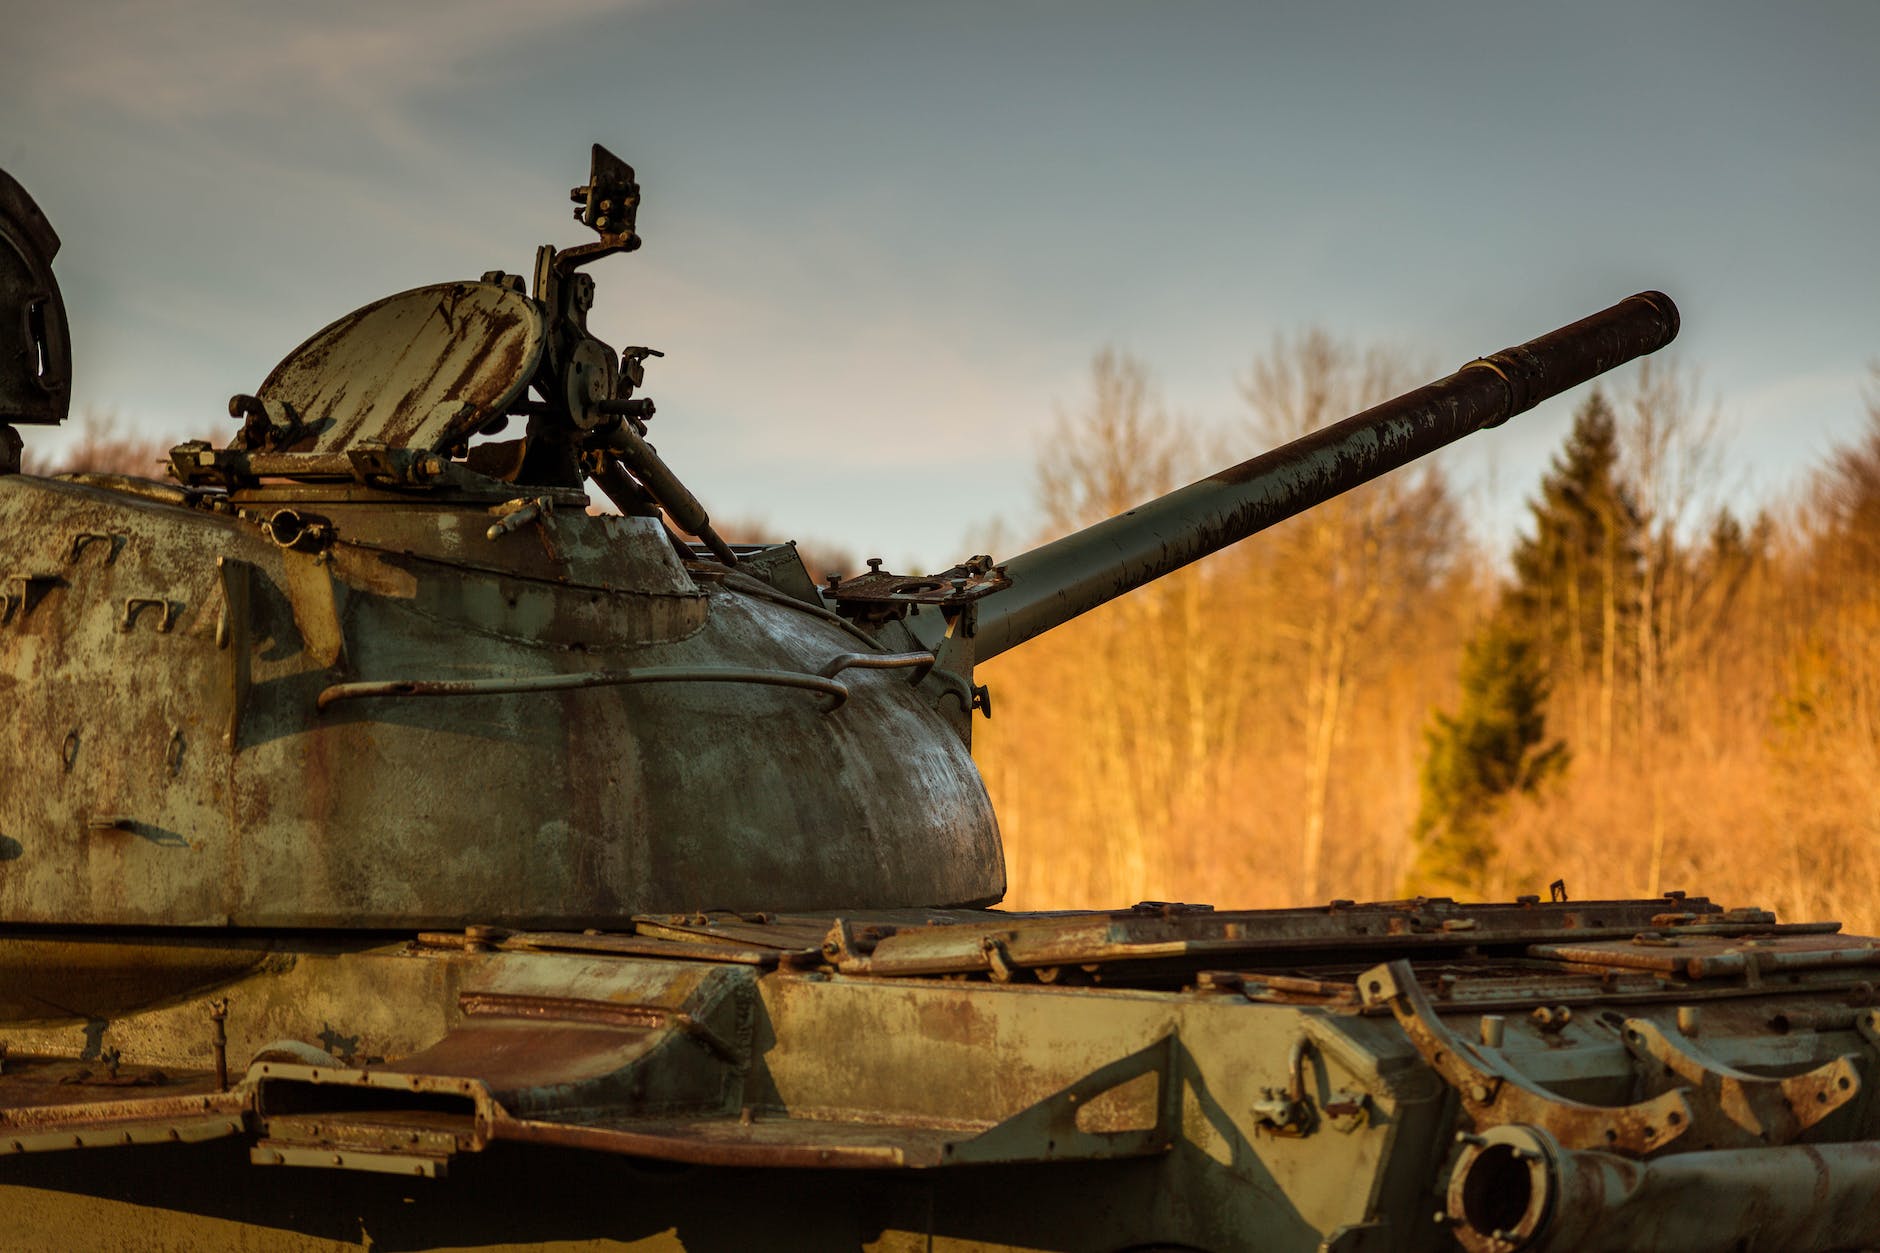 a rusty metal tank near the brown trees